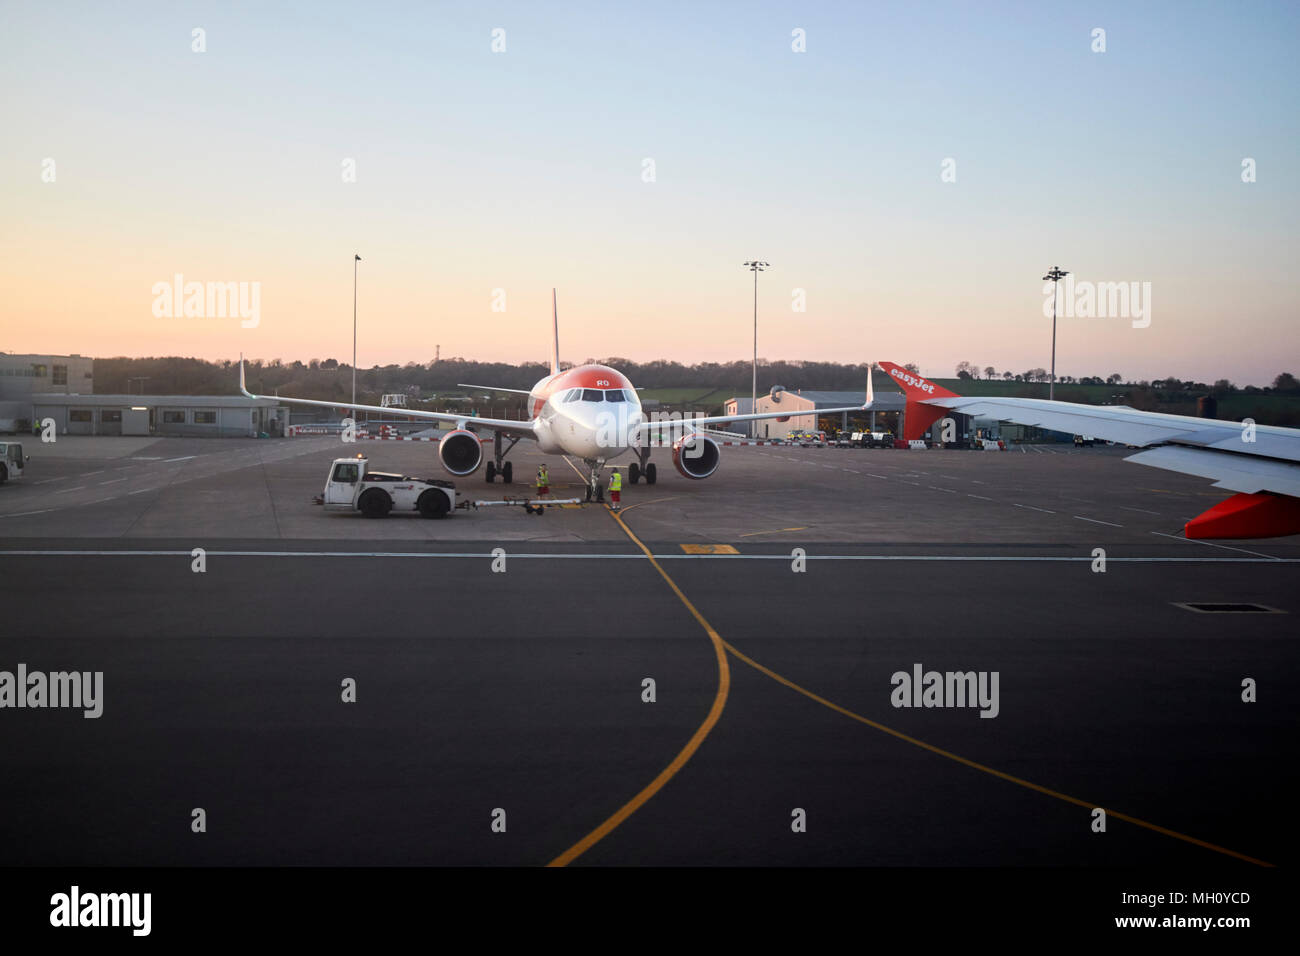 easyjet aircraft waiting to depart on the runway at bristol airport england uk Stock Photo